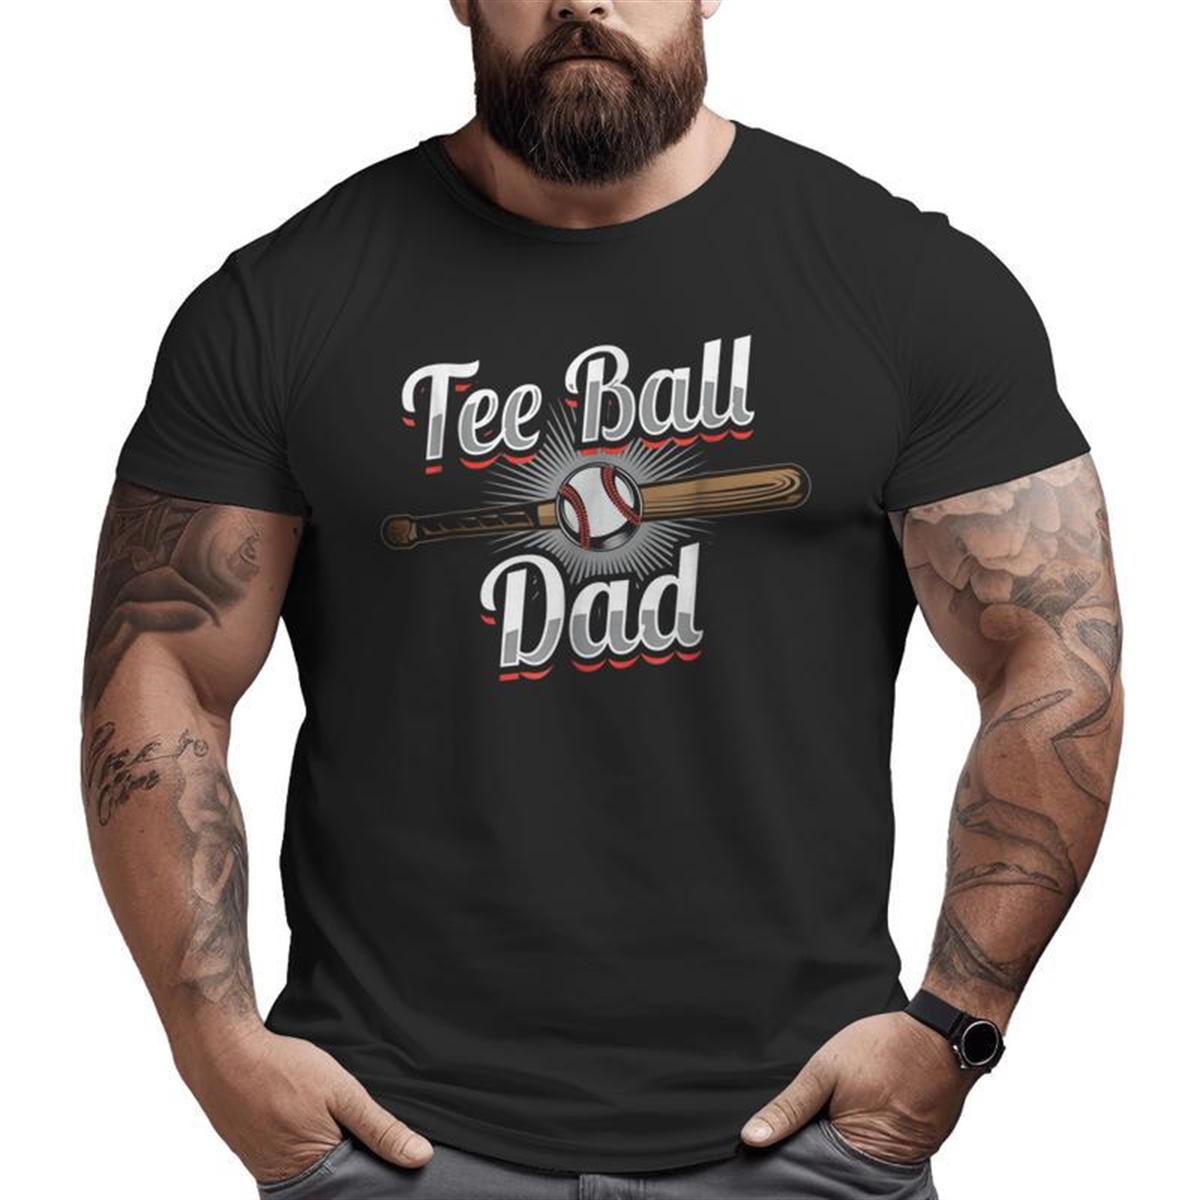 T-ball Dad Tee Ball Fathers Day Baseball Big And Tall Men T-shirt